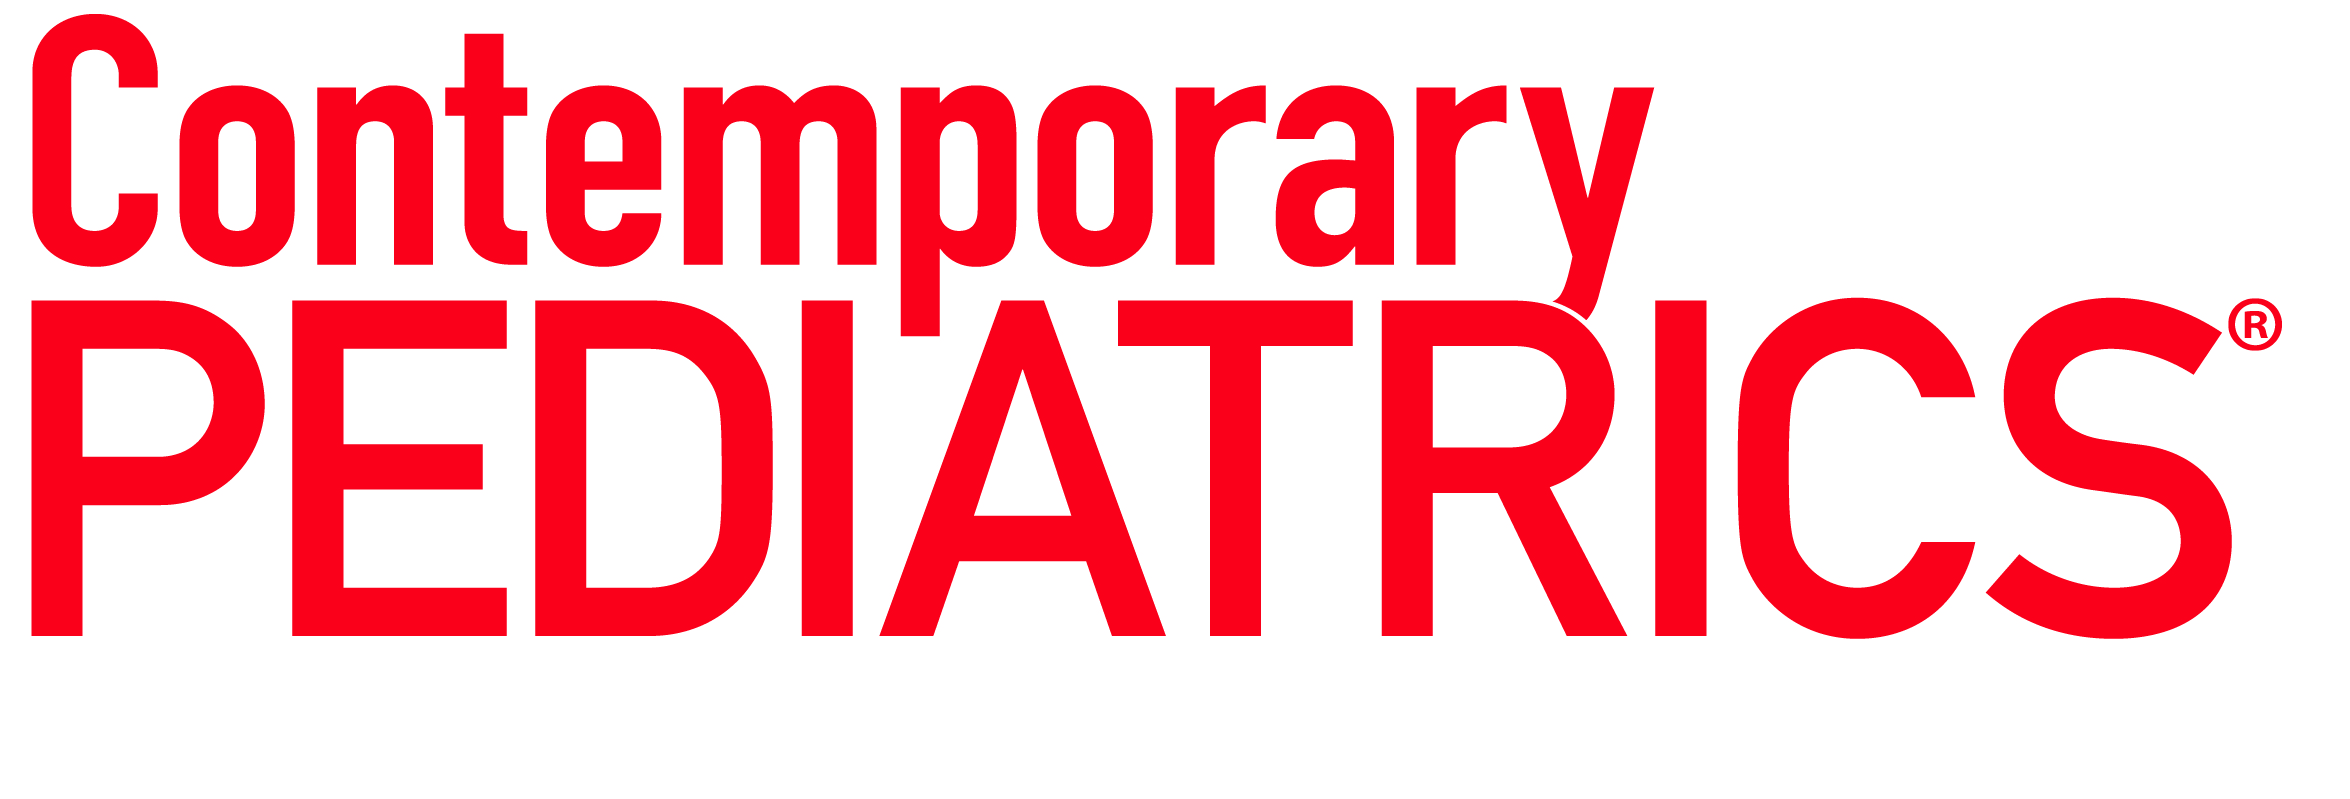 contemporarypediatrics logo